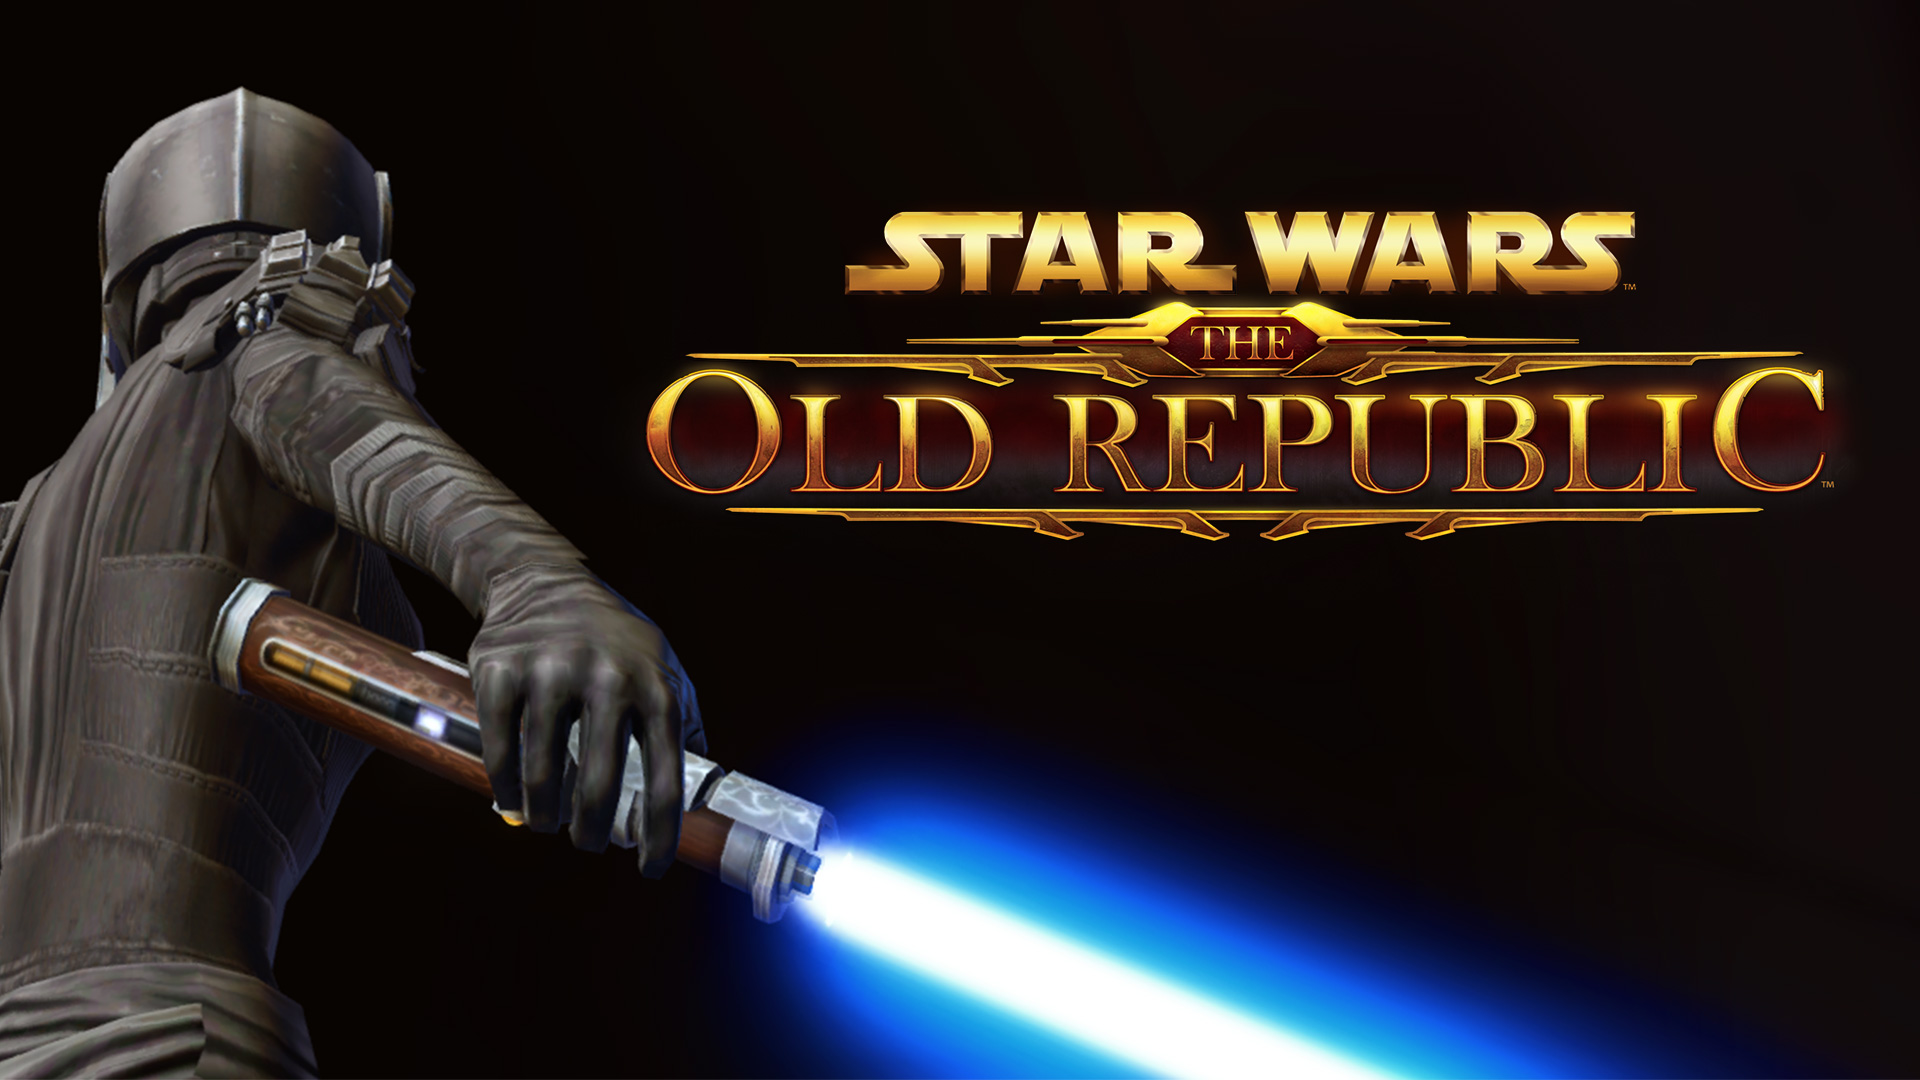 the old republic lightsaber hilts